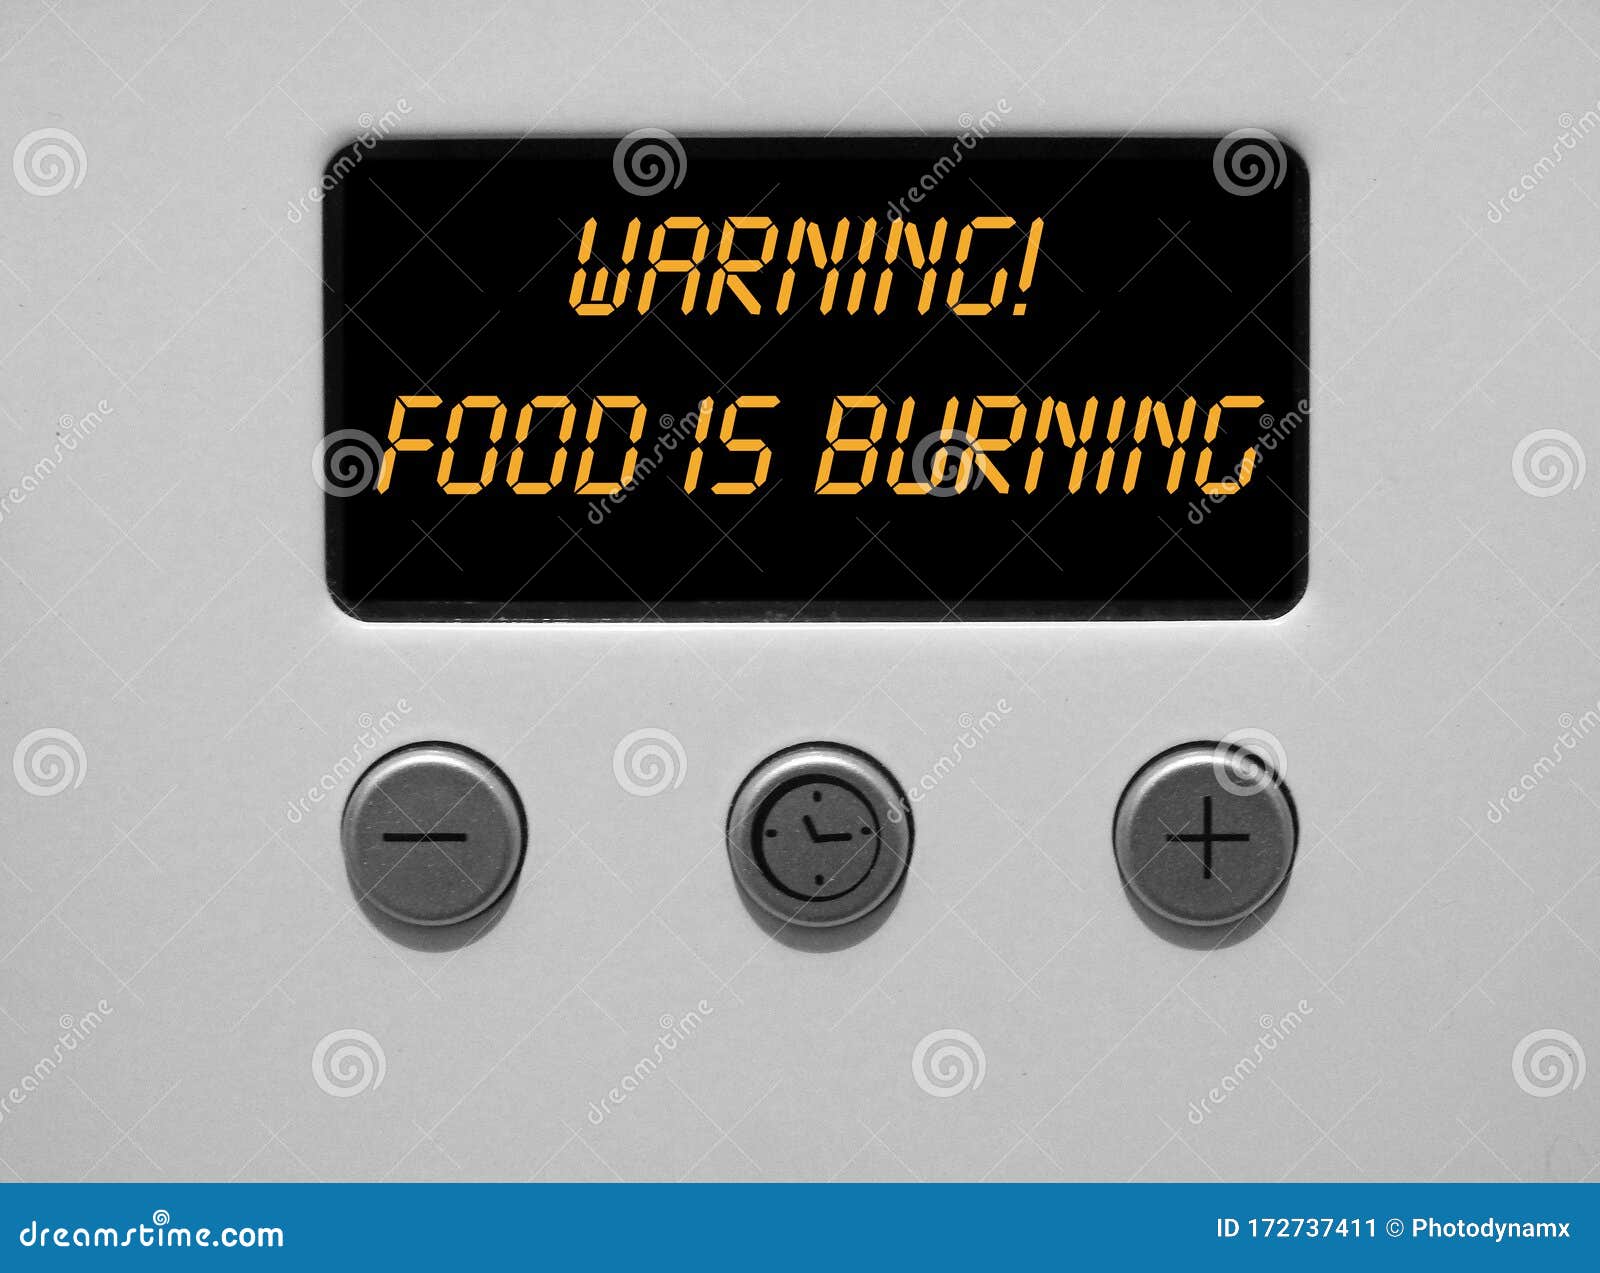 clever digital timer cooker clock message remark witty alert warning dinner dog sign  cook food funny comical phrase quip